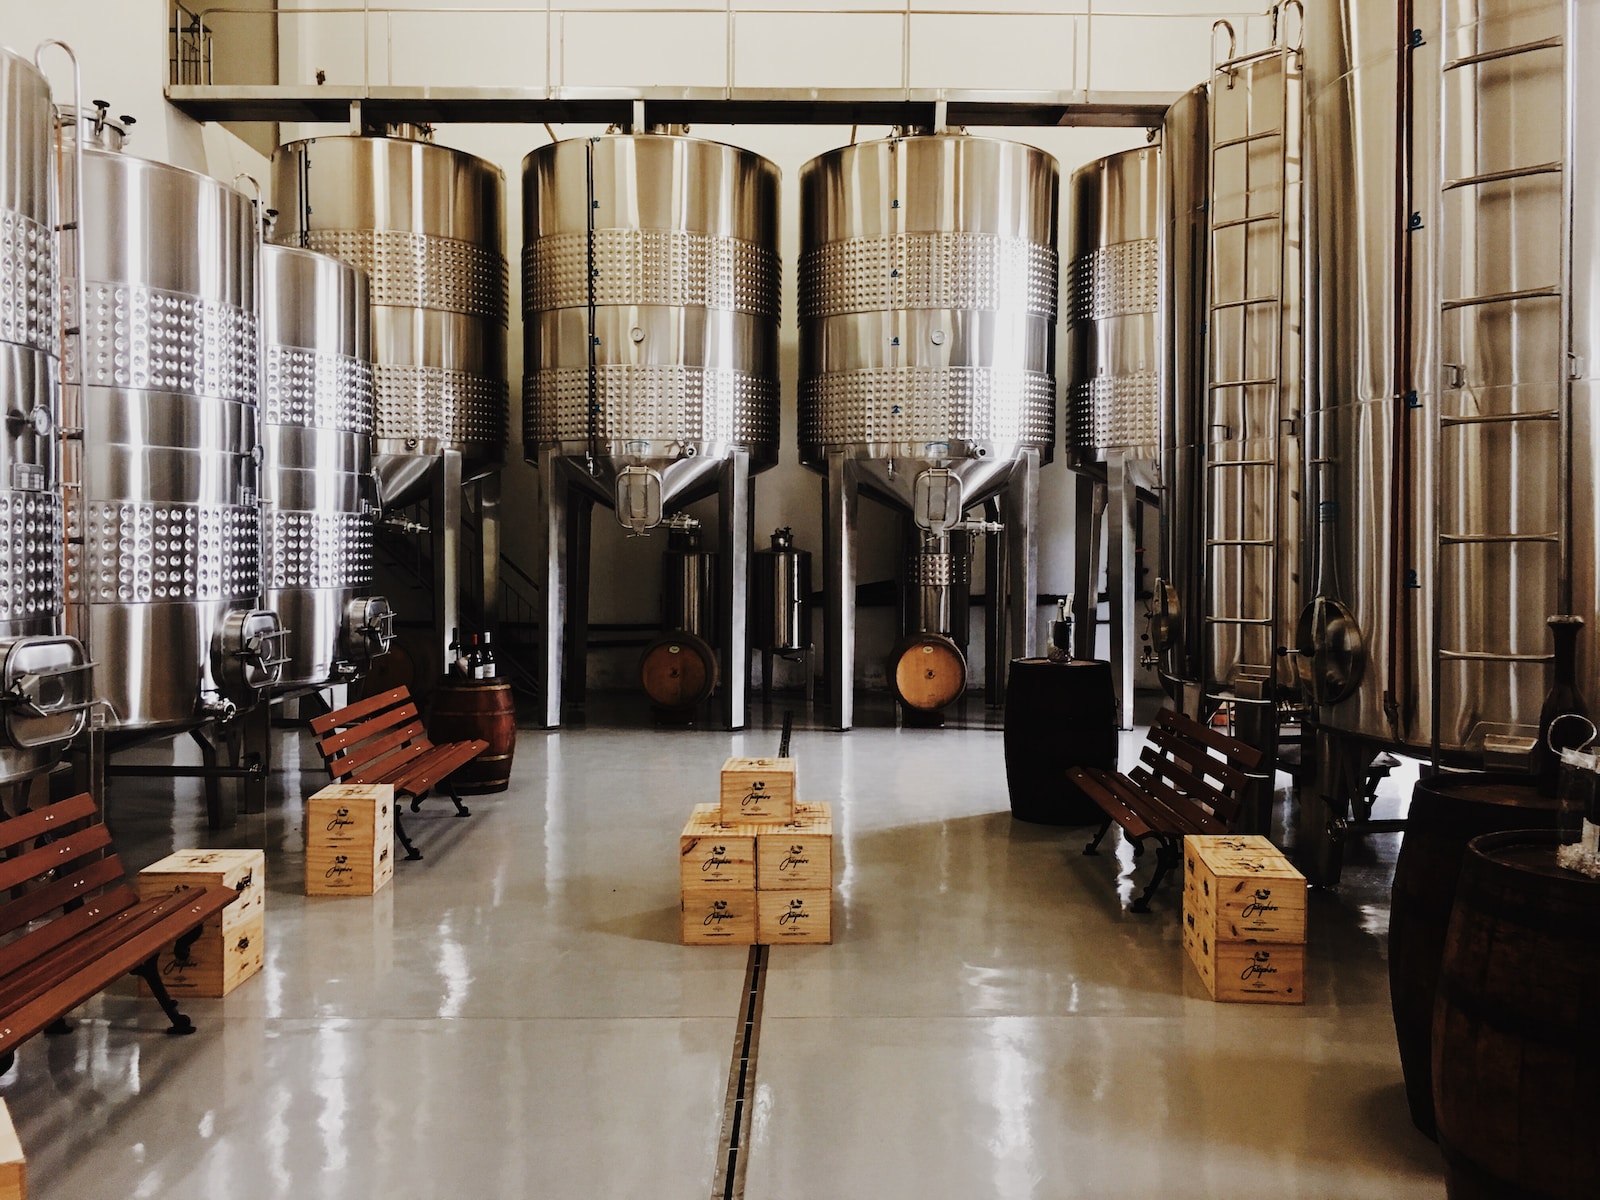 brewery or distillery tanks